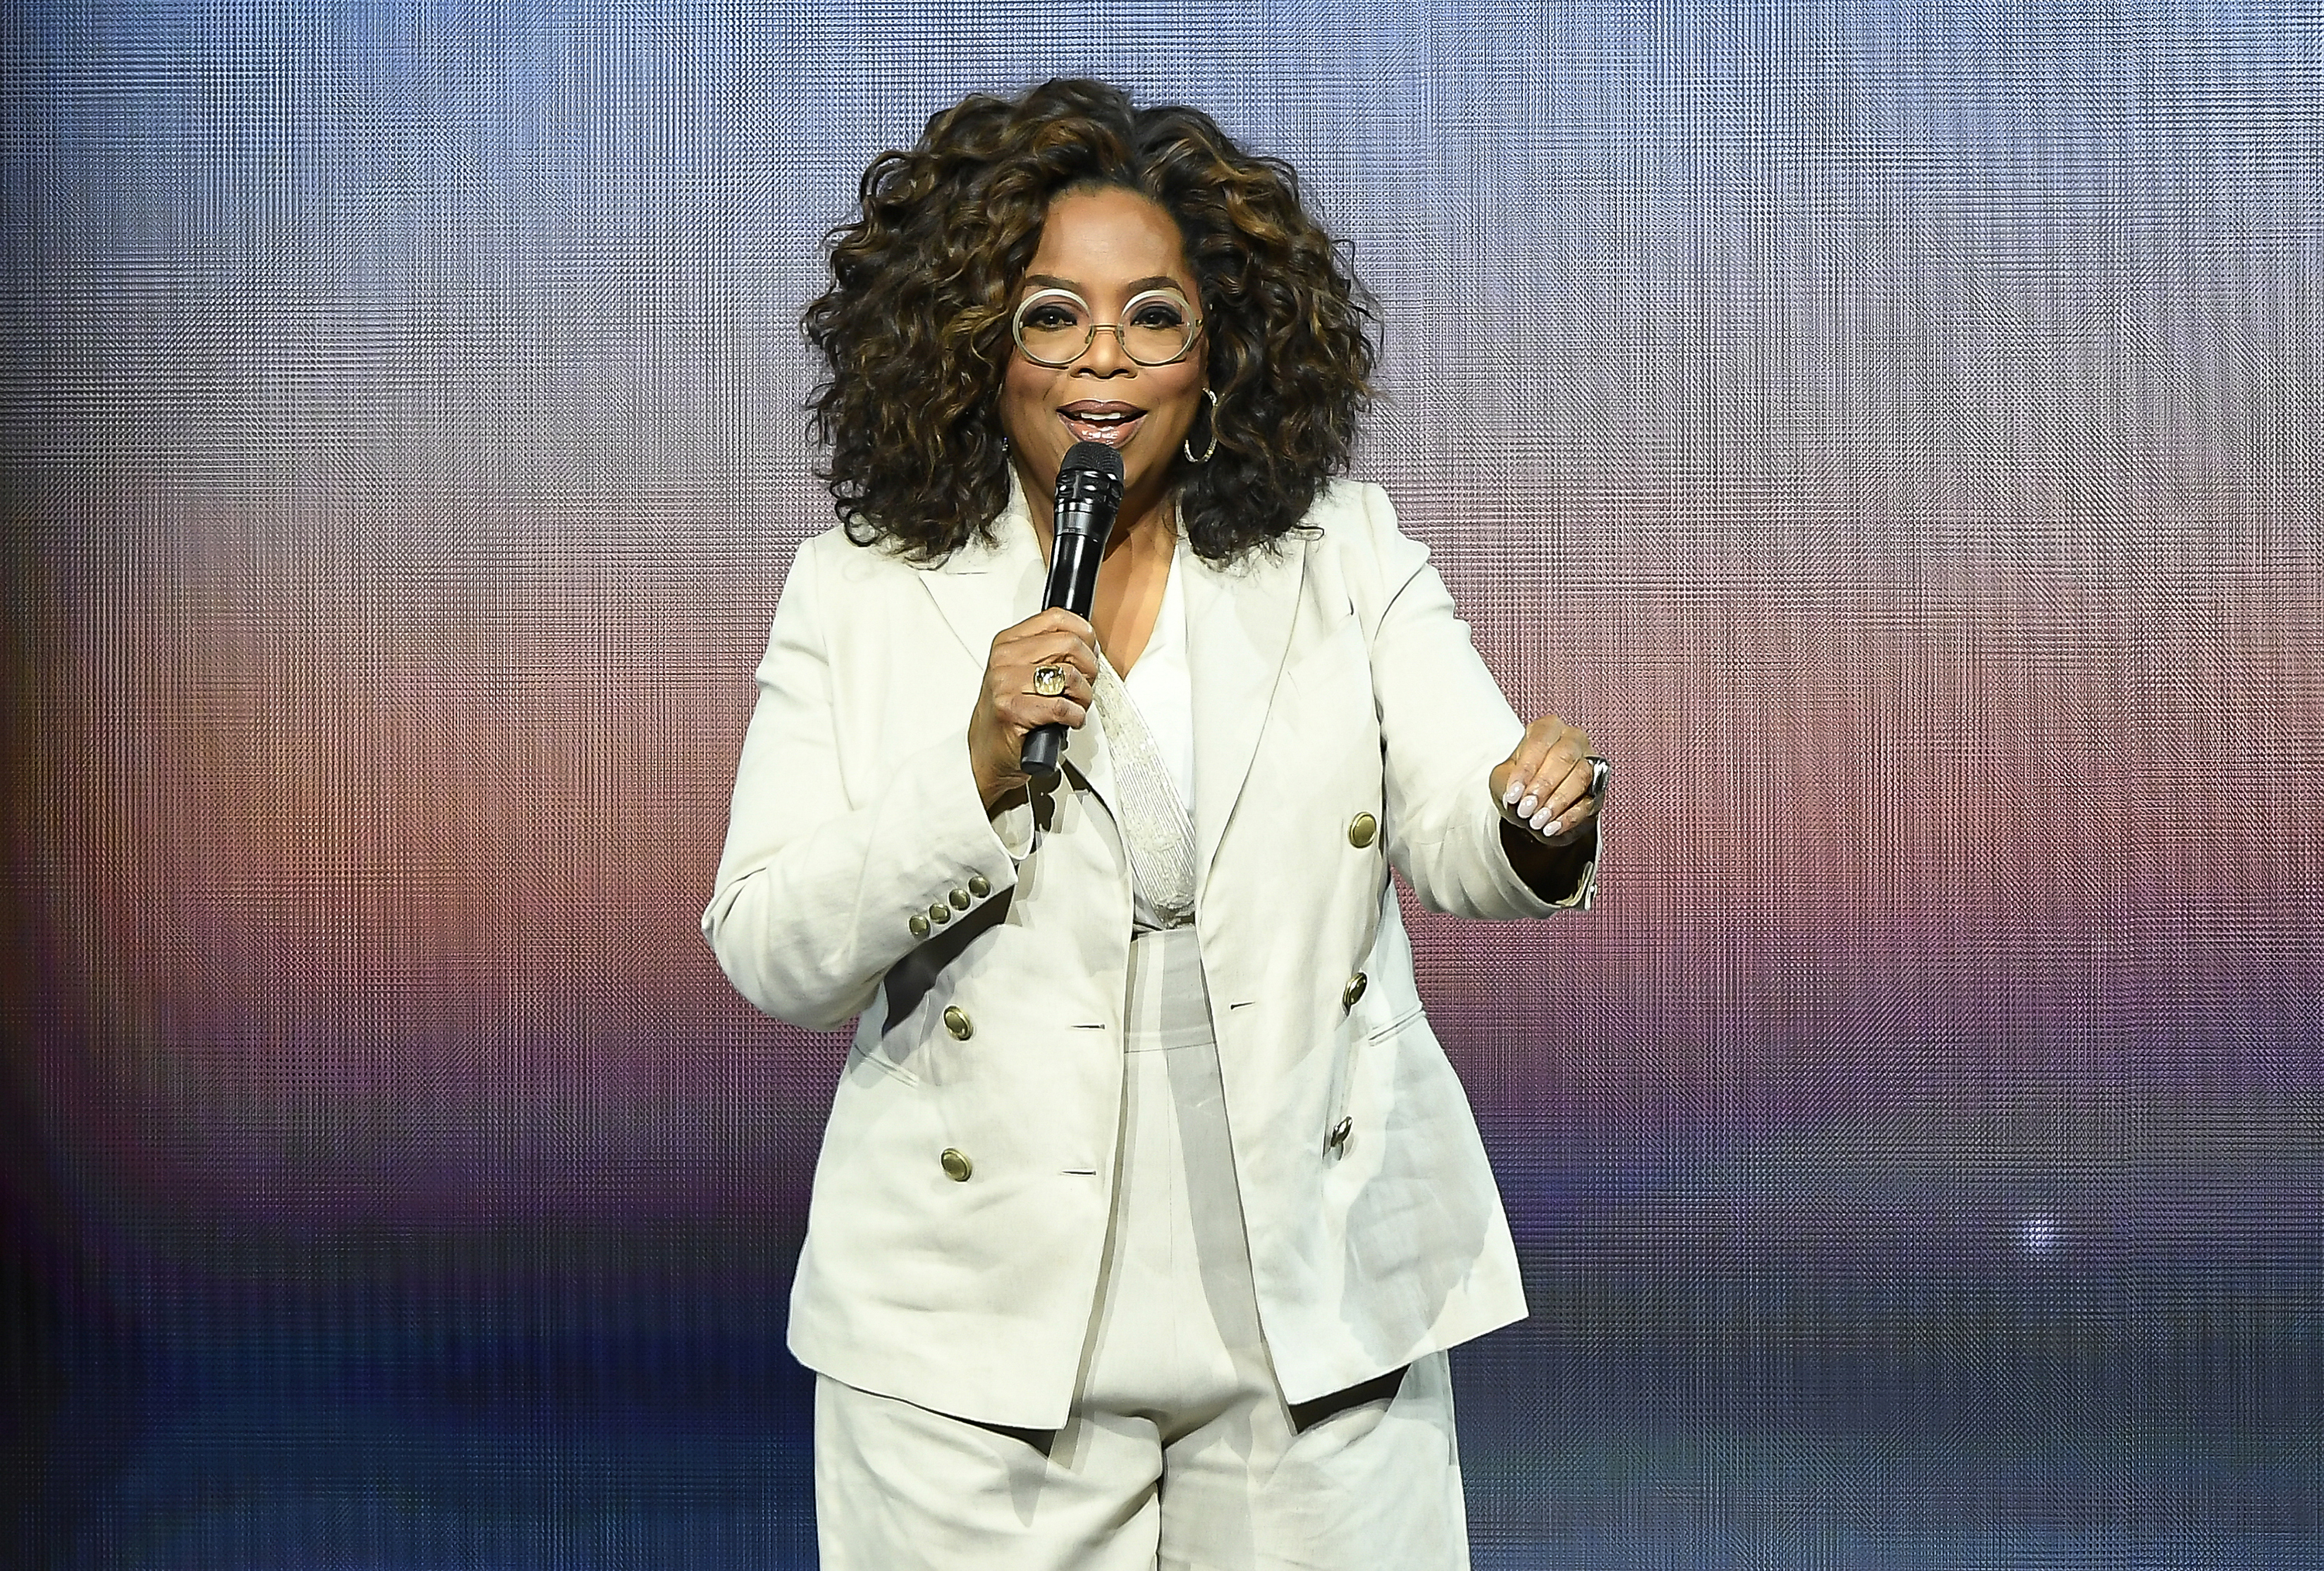 Oprah Winfrey speaking onstage, wearing a stylish suit